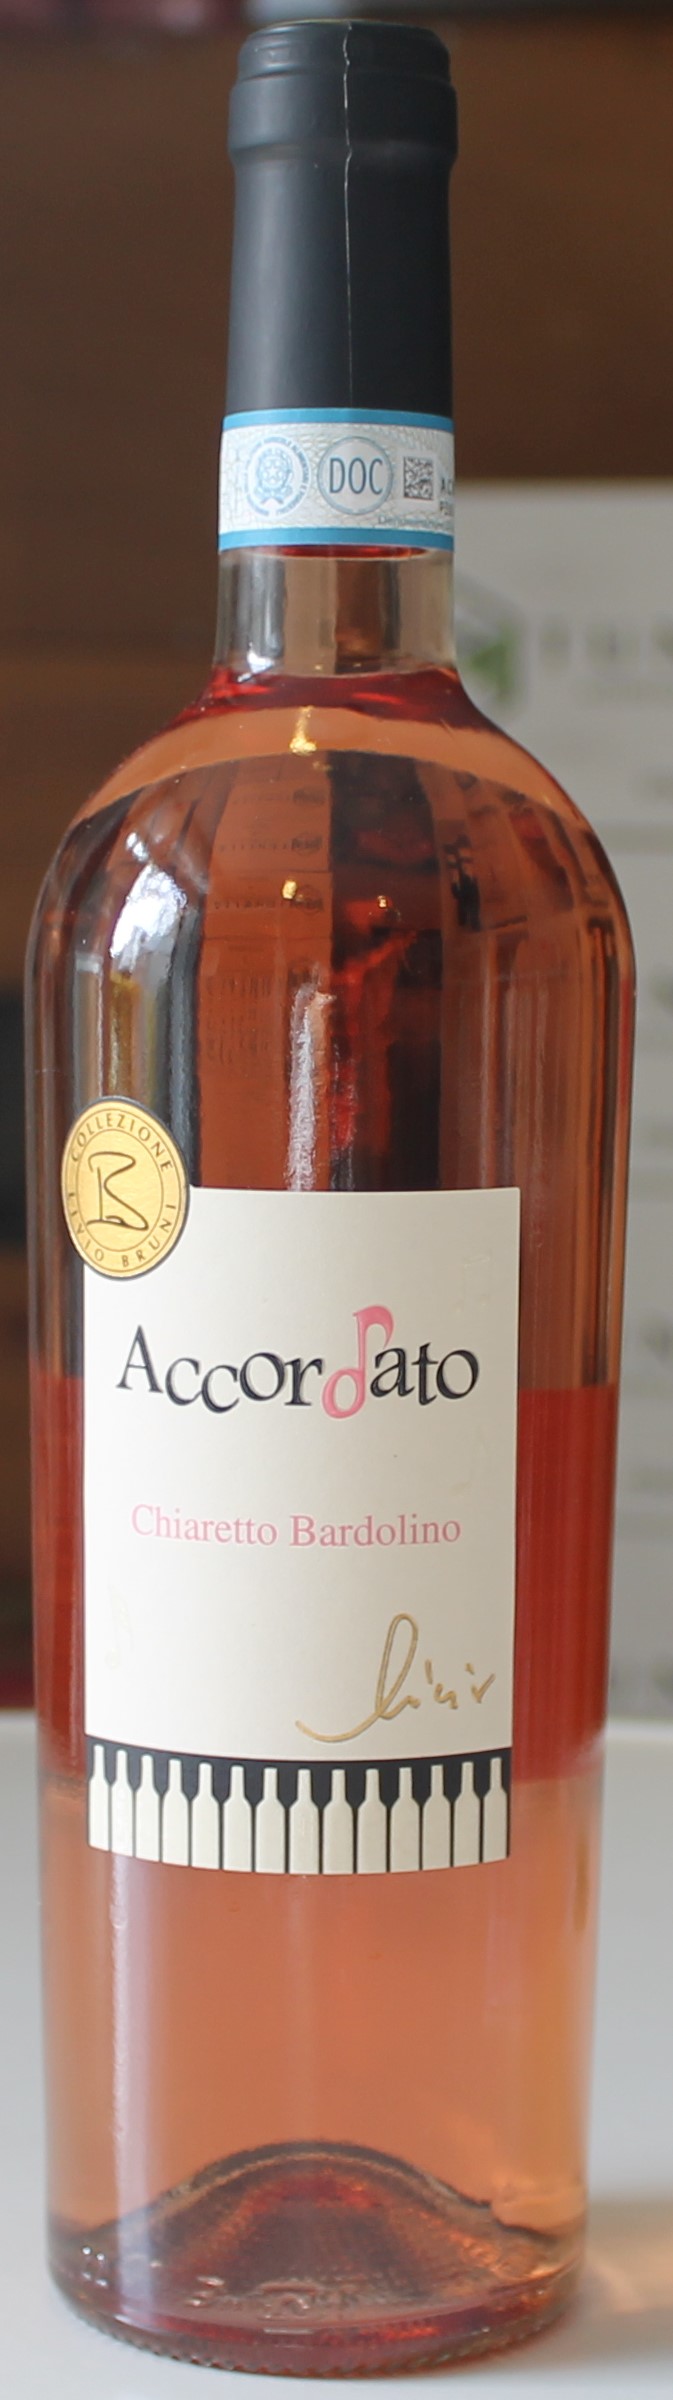 Bardolino chiaretto doc accordato | Vinotoni Delikatessen - Italienischer  Wein, Kaffee, Bio Olivenöl direkt vom Importeur!